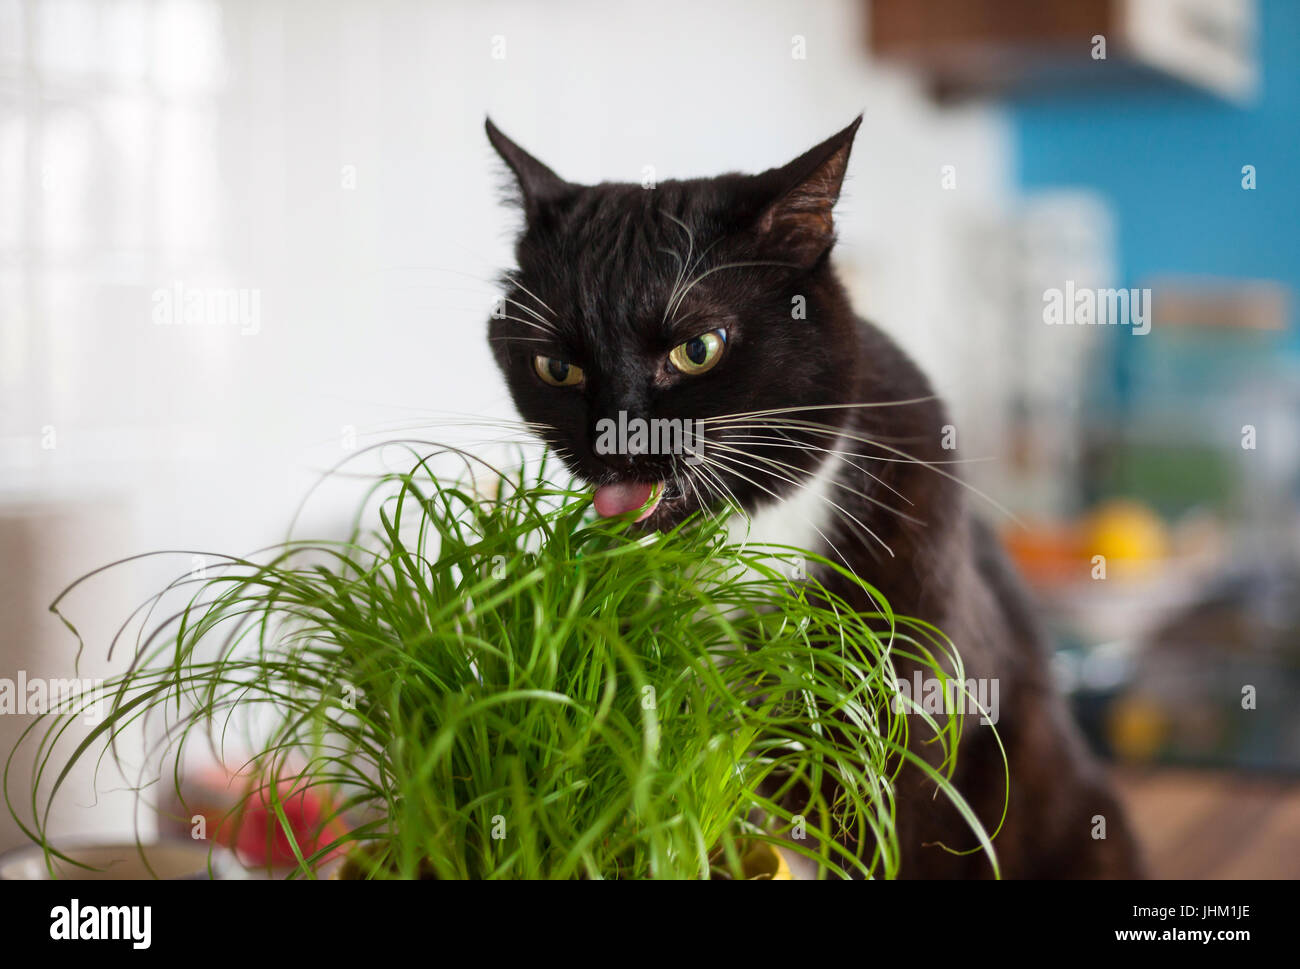 Black cat eating cat grass Stock Photo